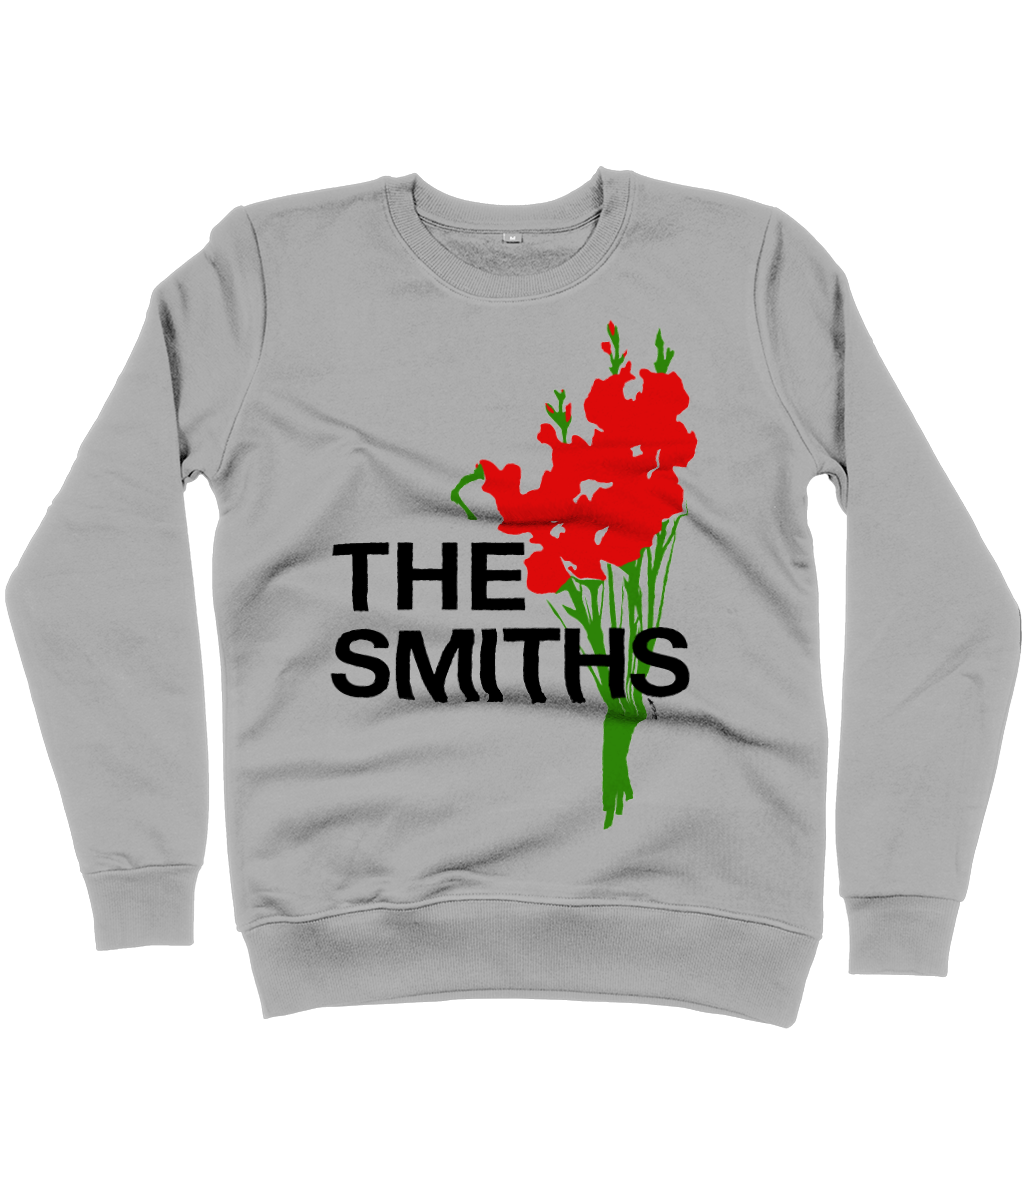 THE SMITHS - UK Tour 1984 - Sweatshirt